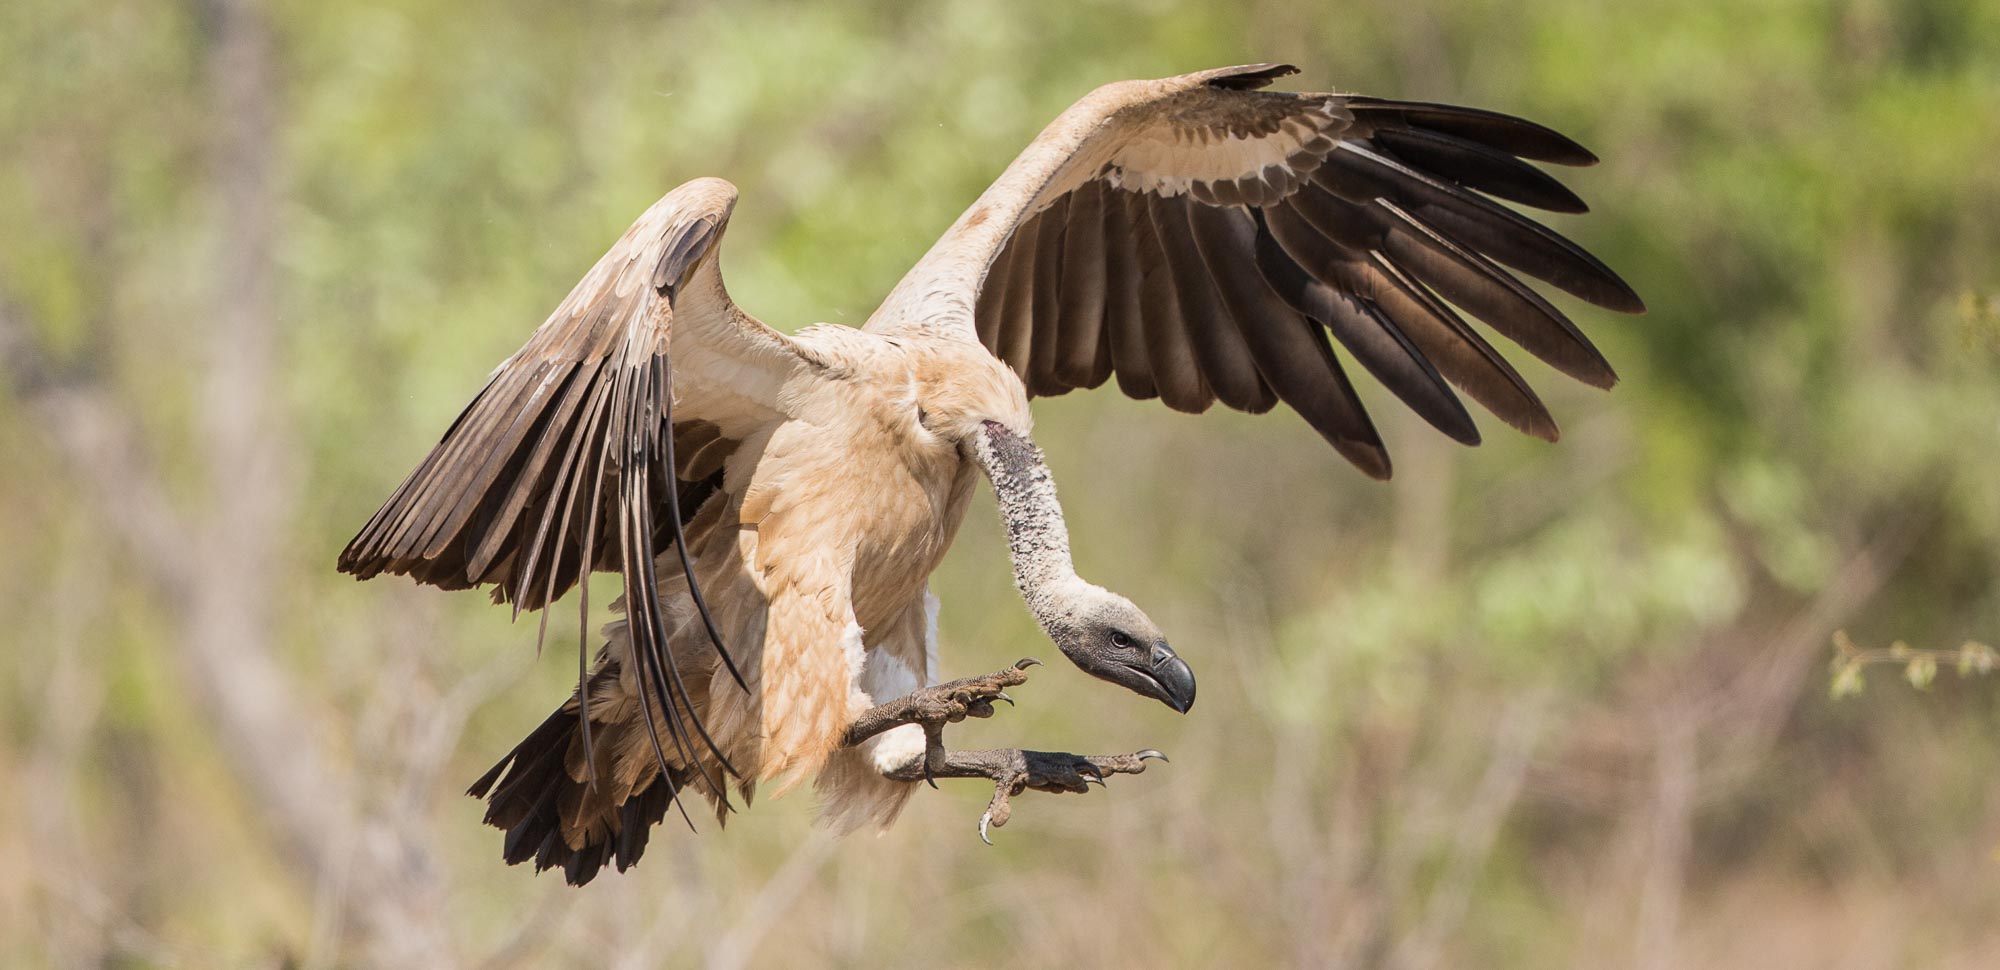 Vultures on downward spiral | Africa's threatened wildlife | Love ...